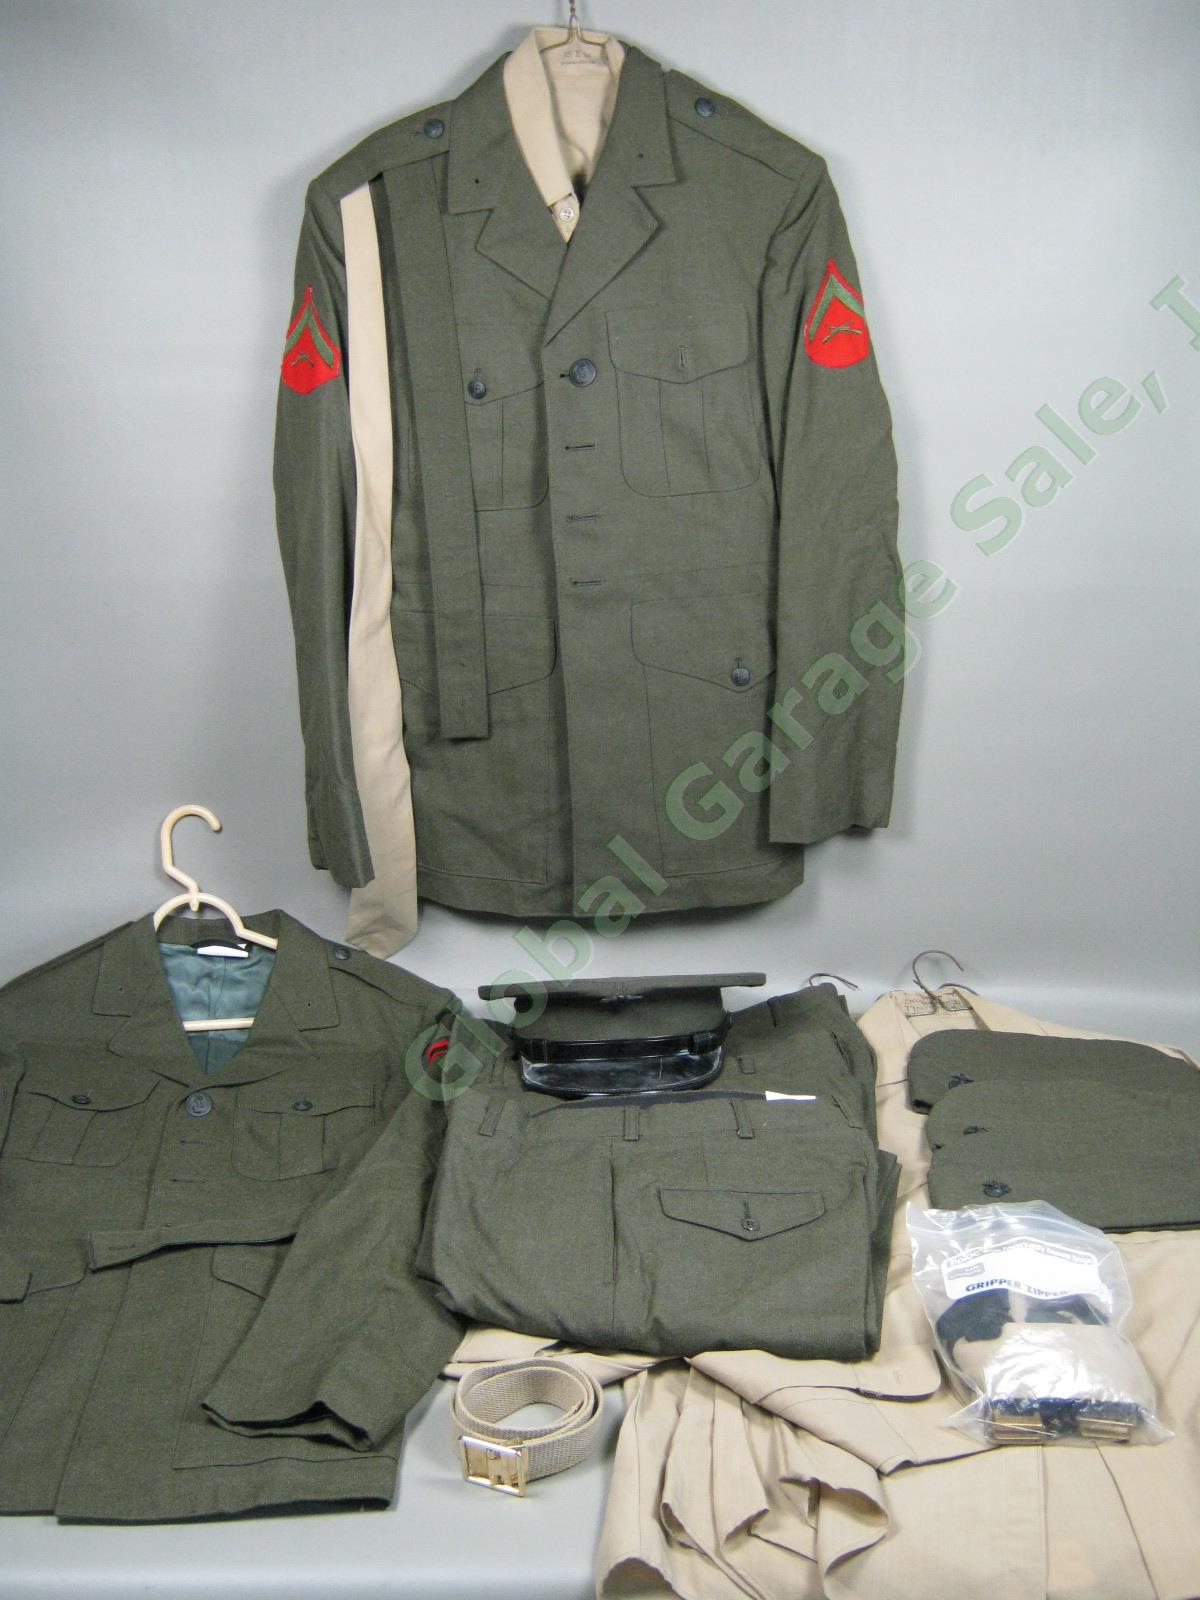 Huge USMC Marine Corps Charlie Uniform Pants Jackets Shirts Cap Lot Never Worn!